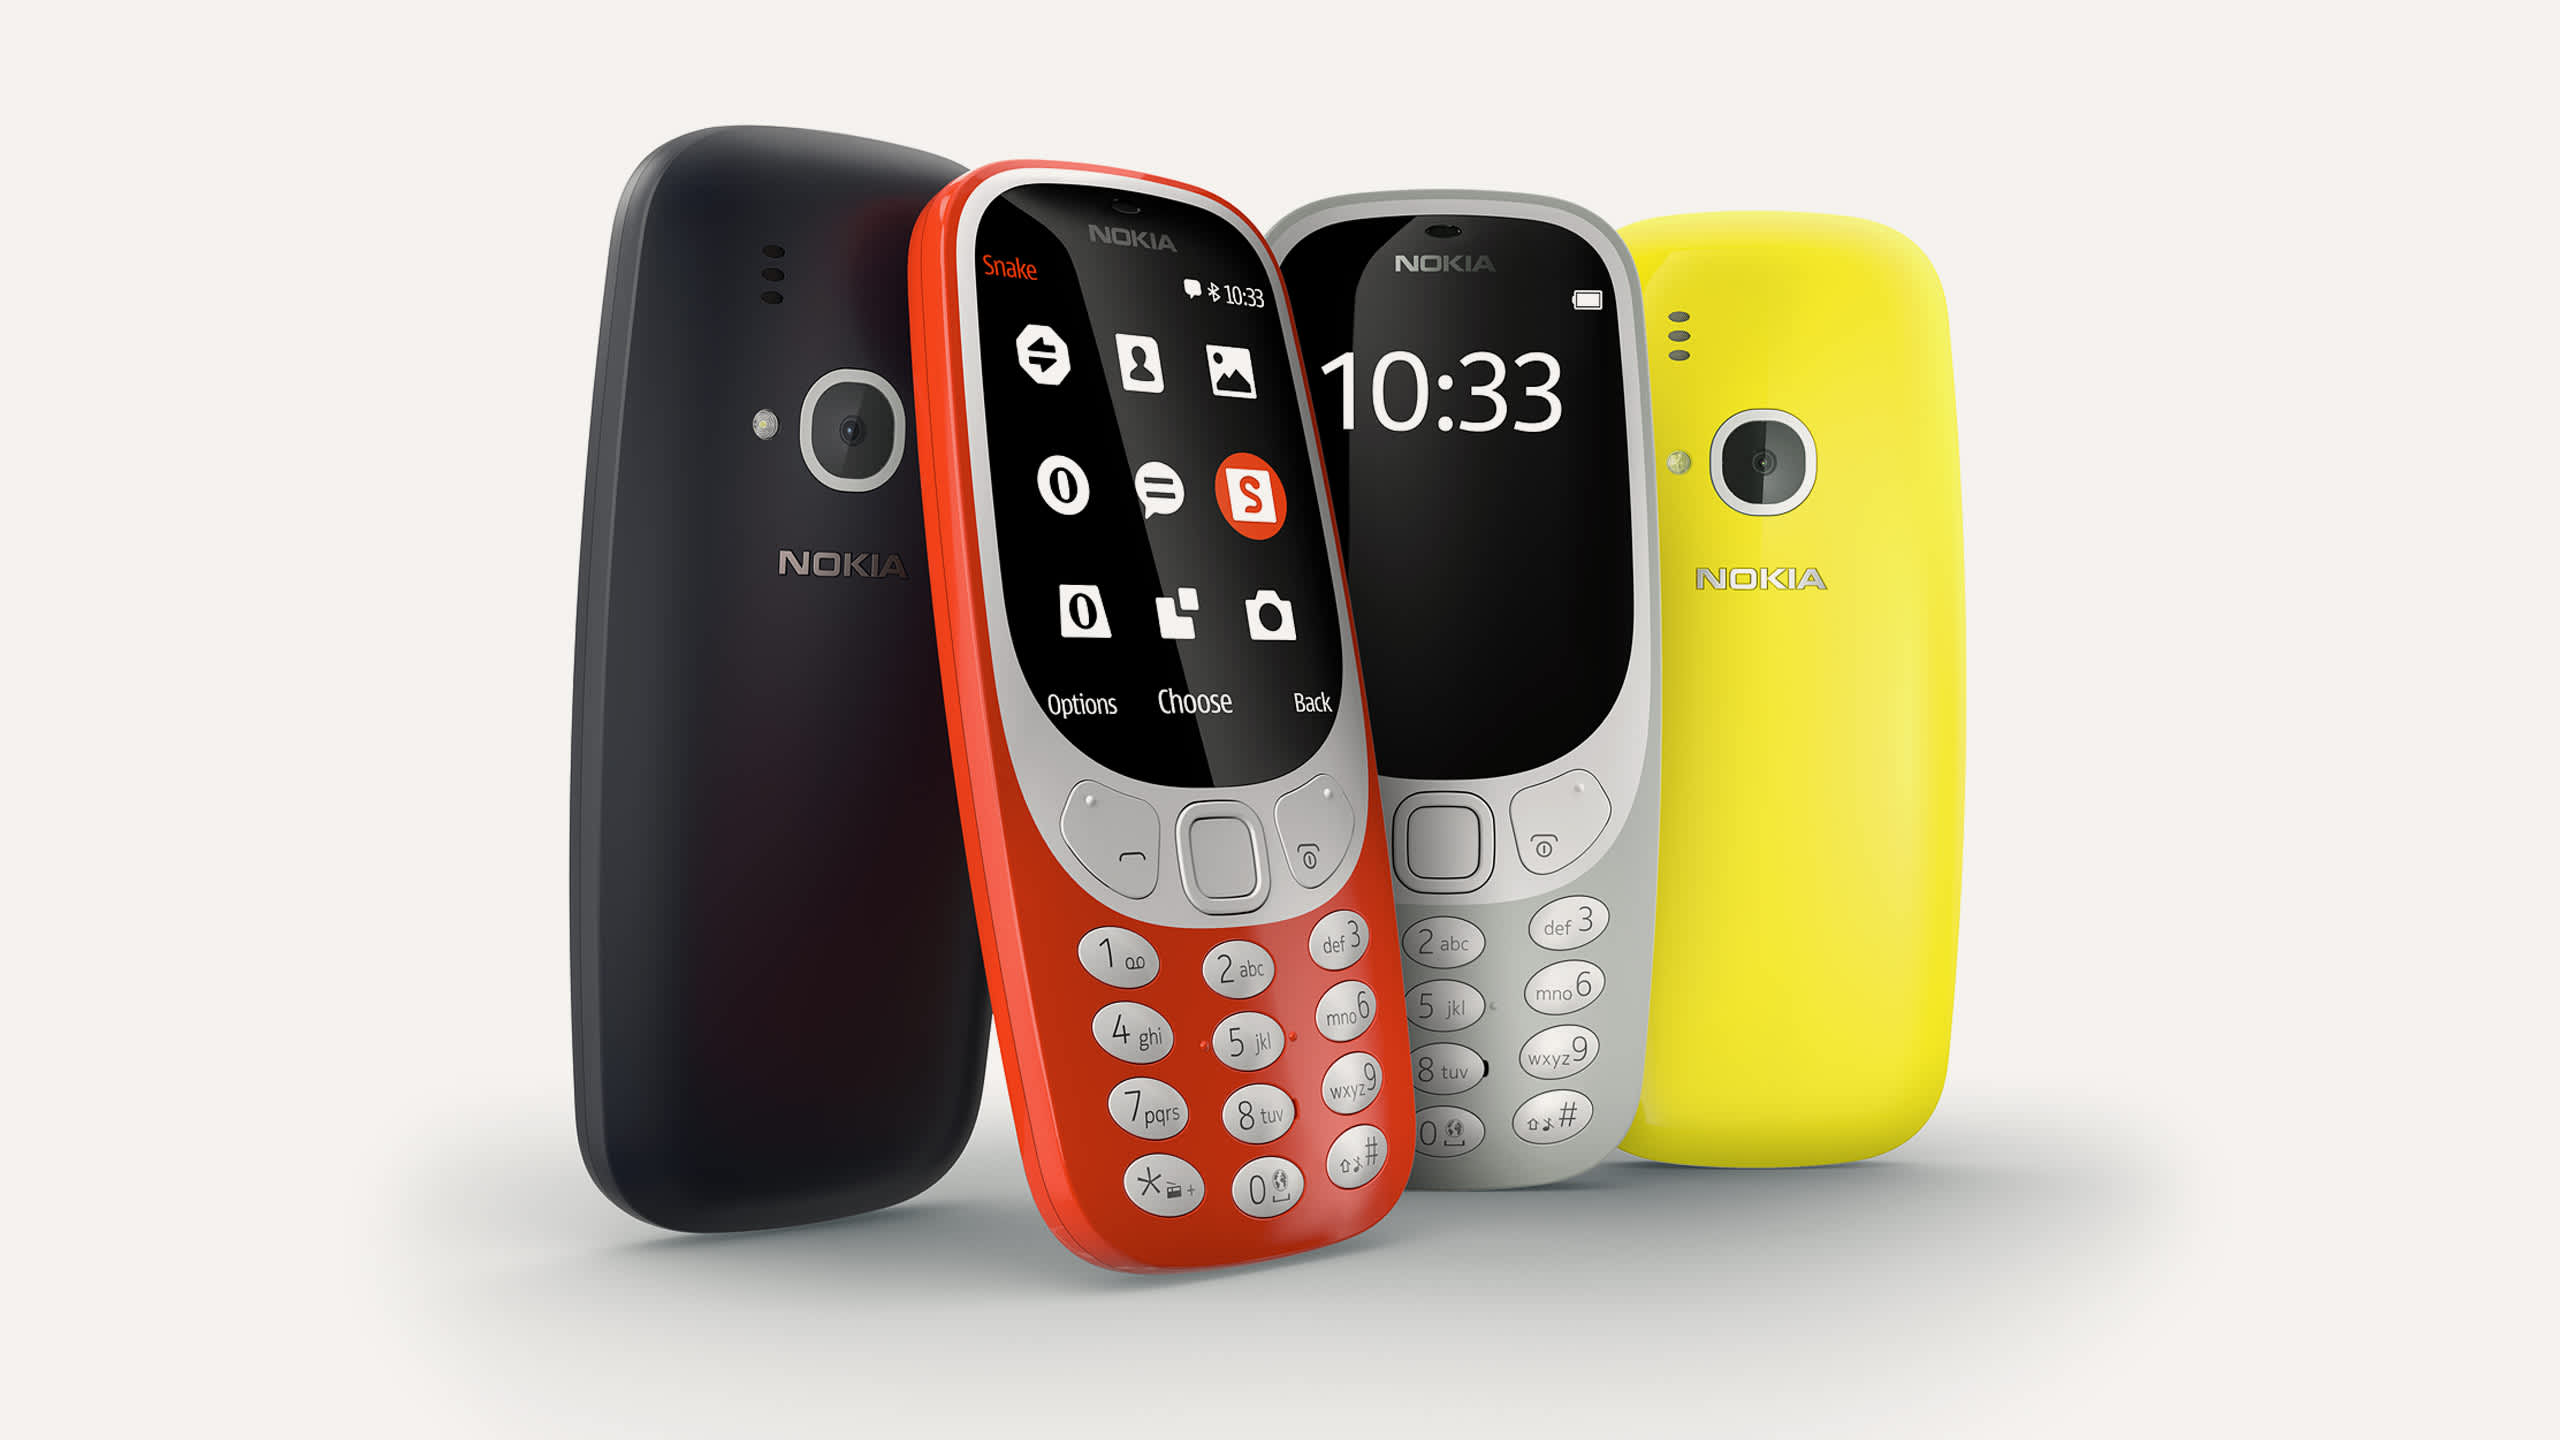 Nokia 3310 New Model Nokia Phones International English